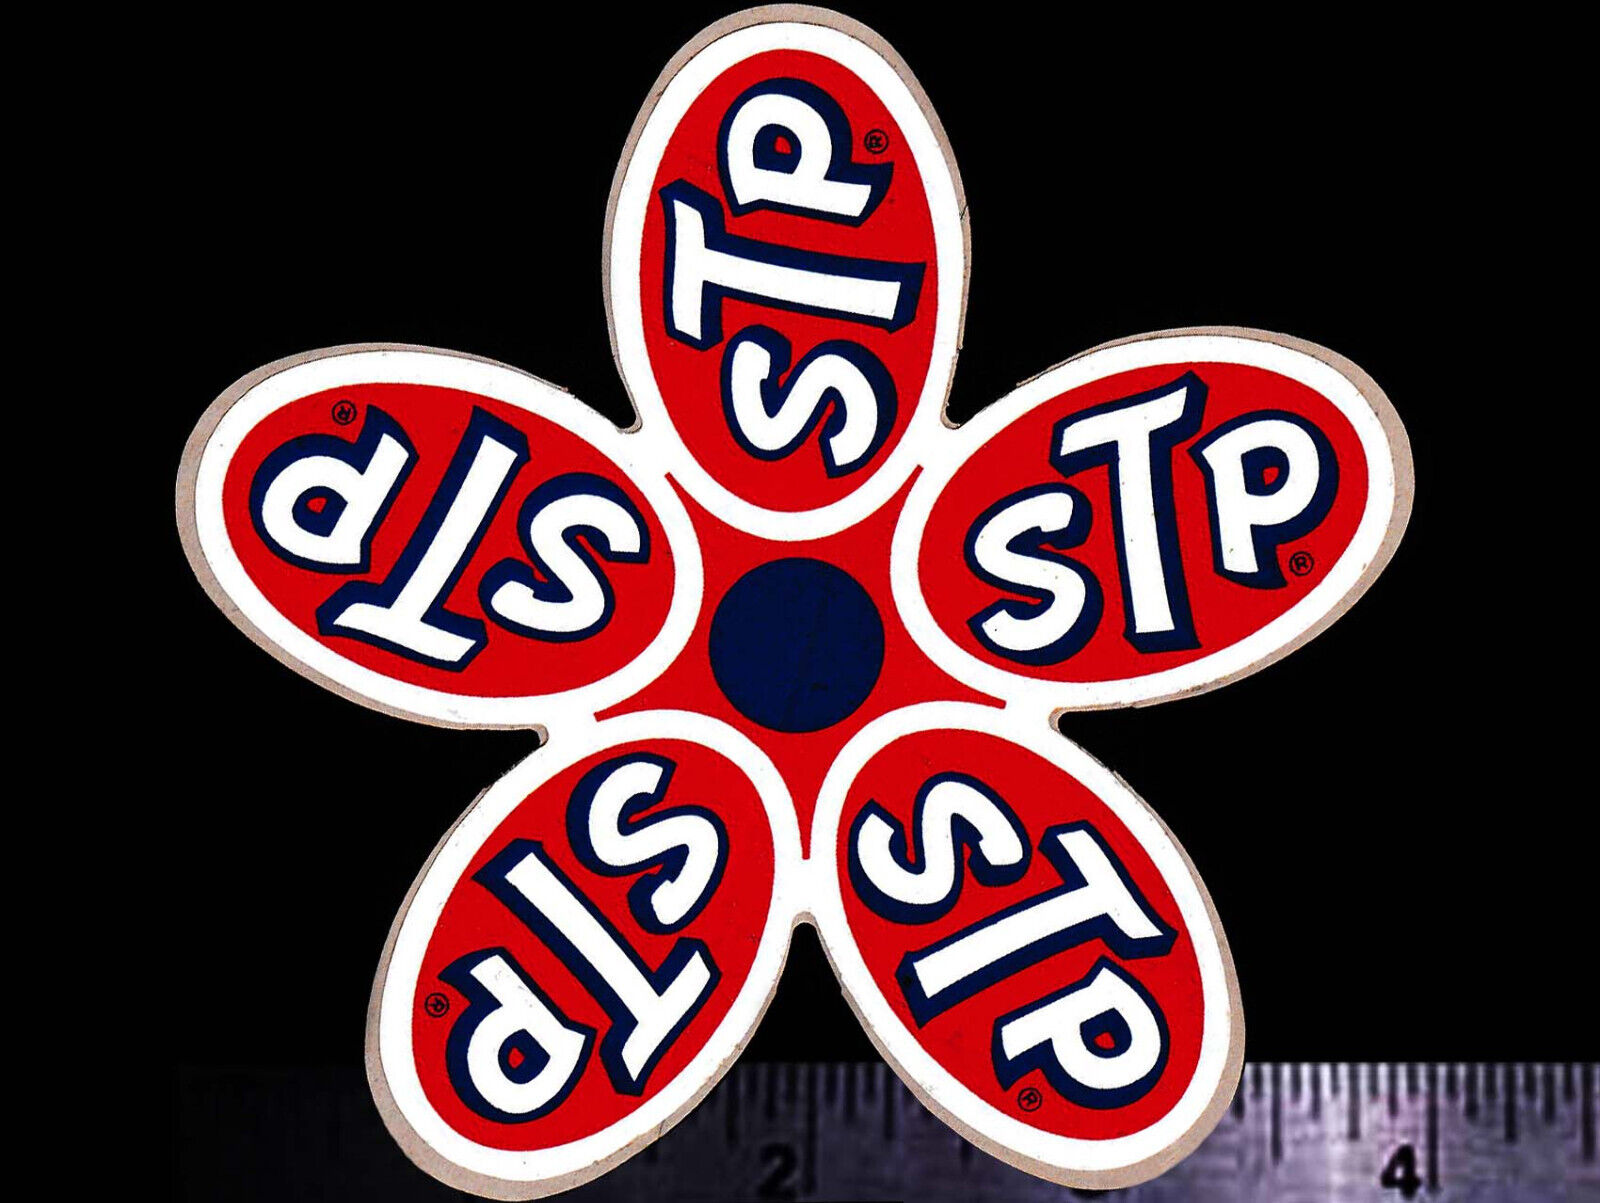 STP Flower - Original Vintage 1960's 70's Racing Decal/Sticker